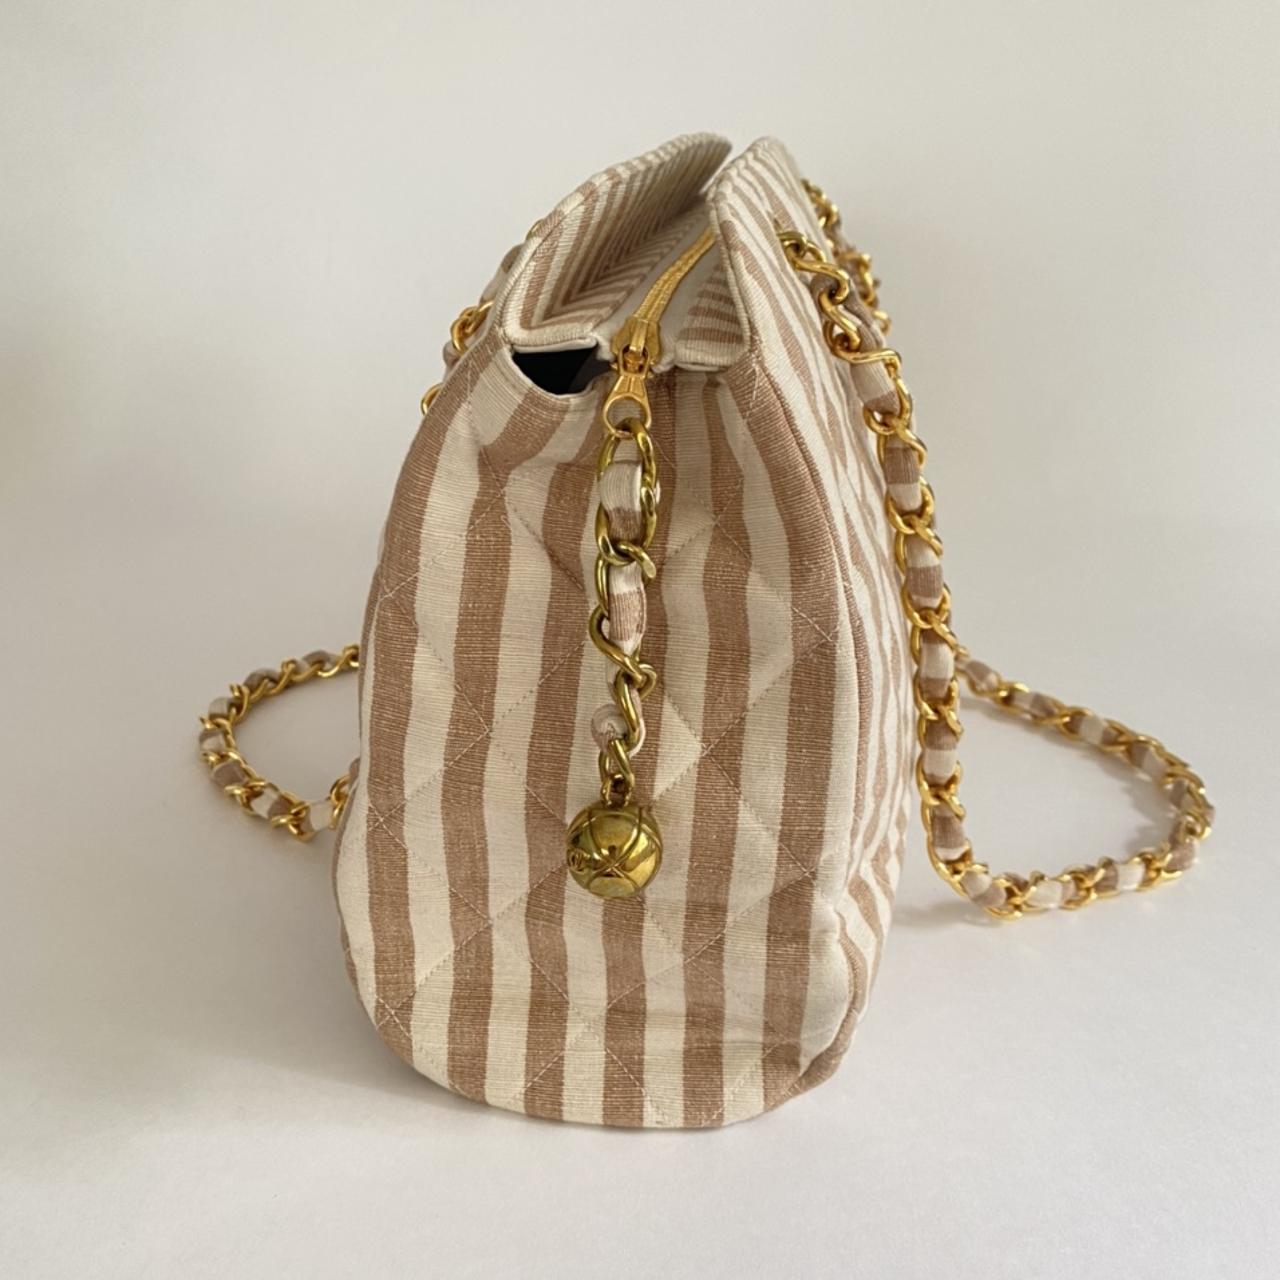 Chanel vintage striped tote bag., Circa